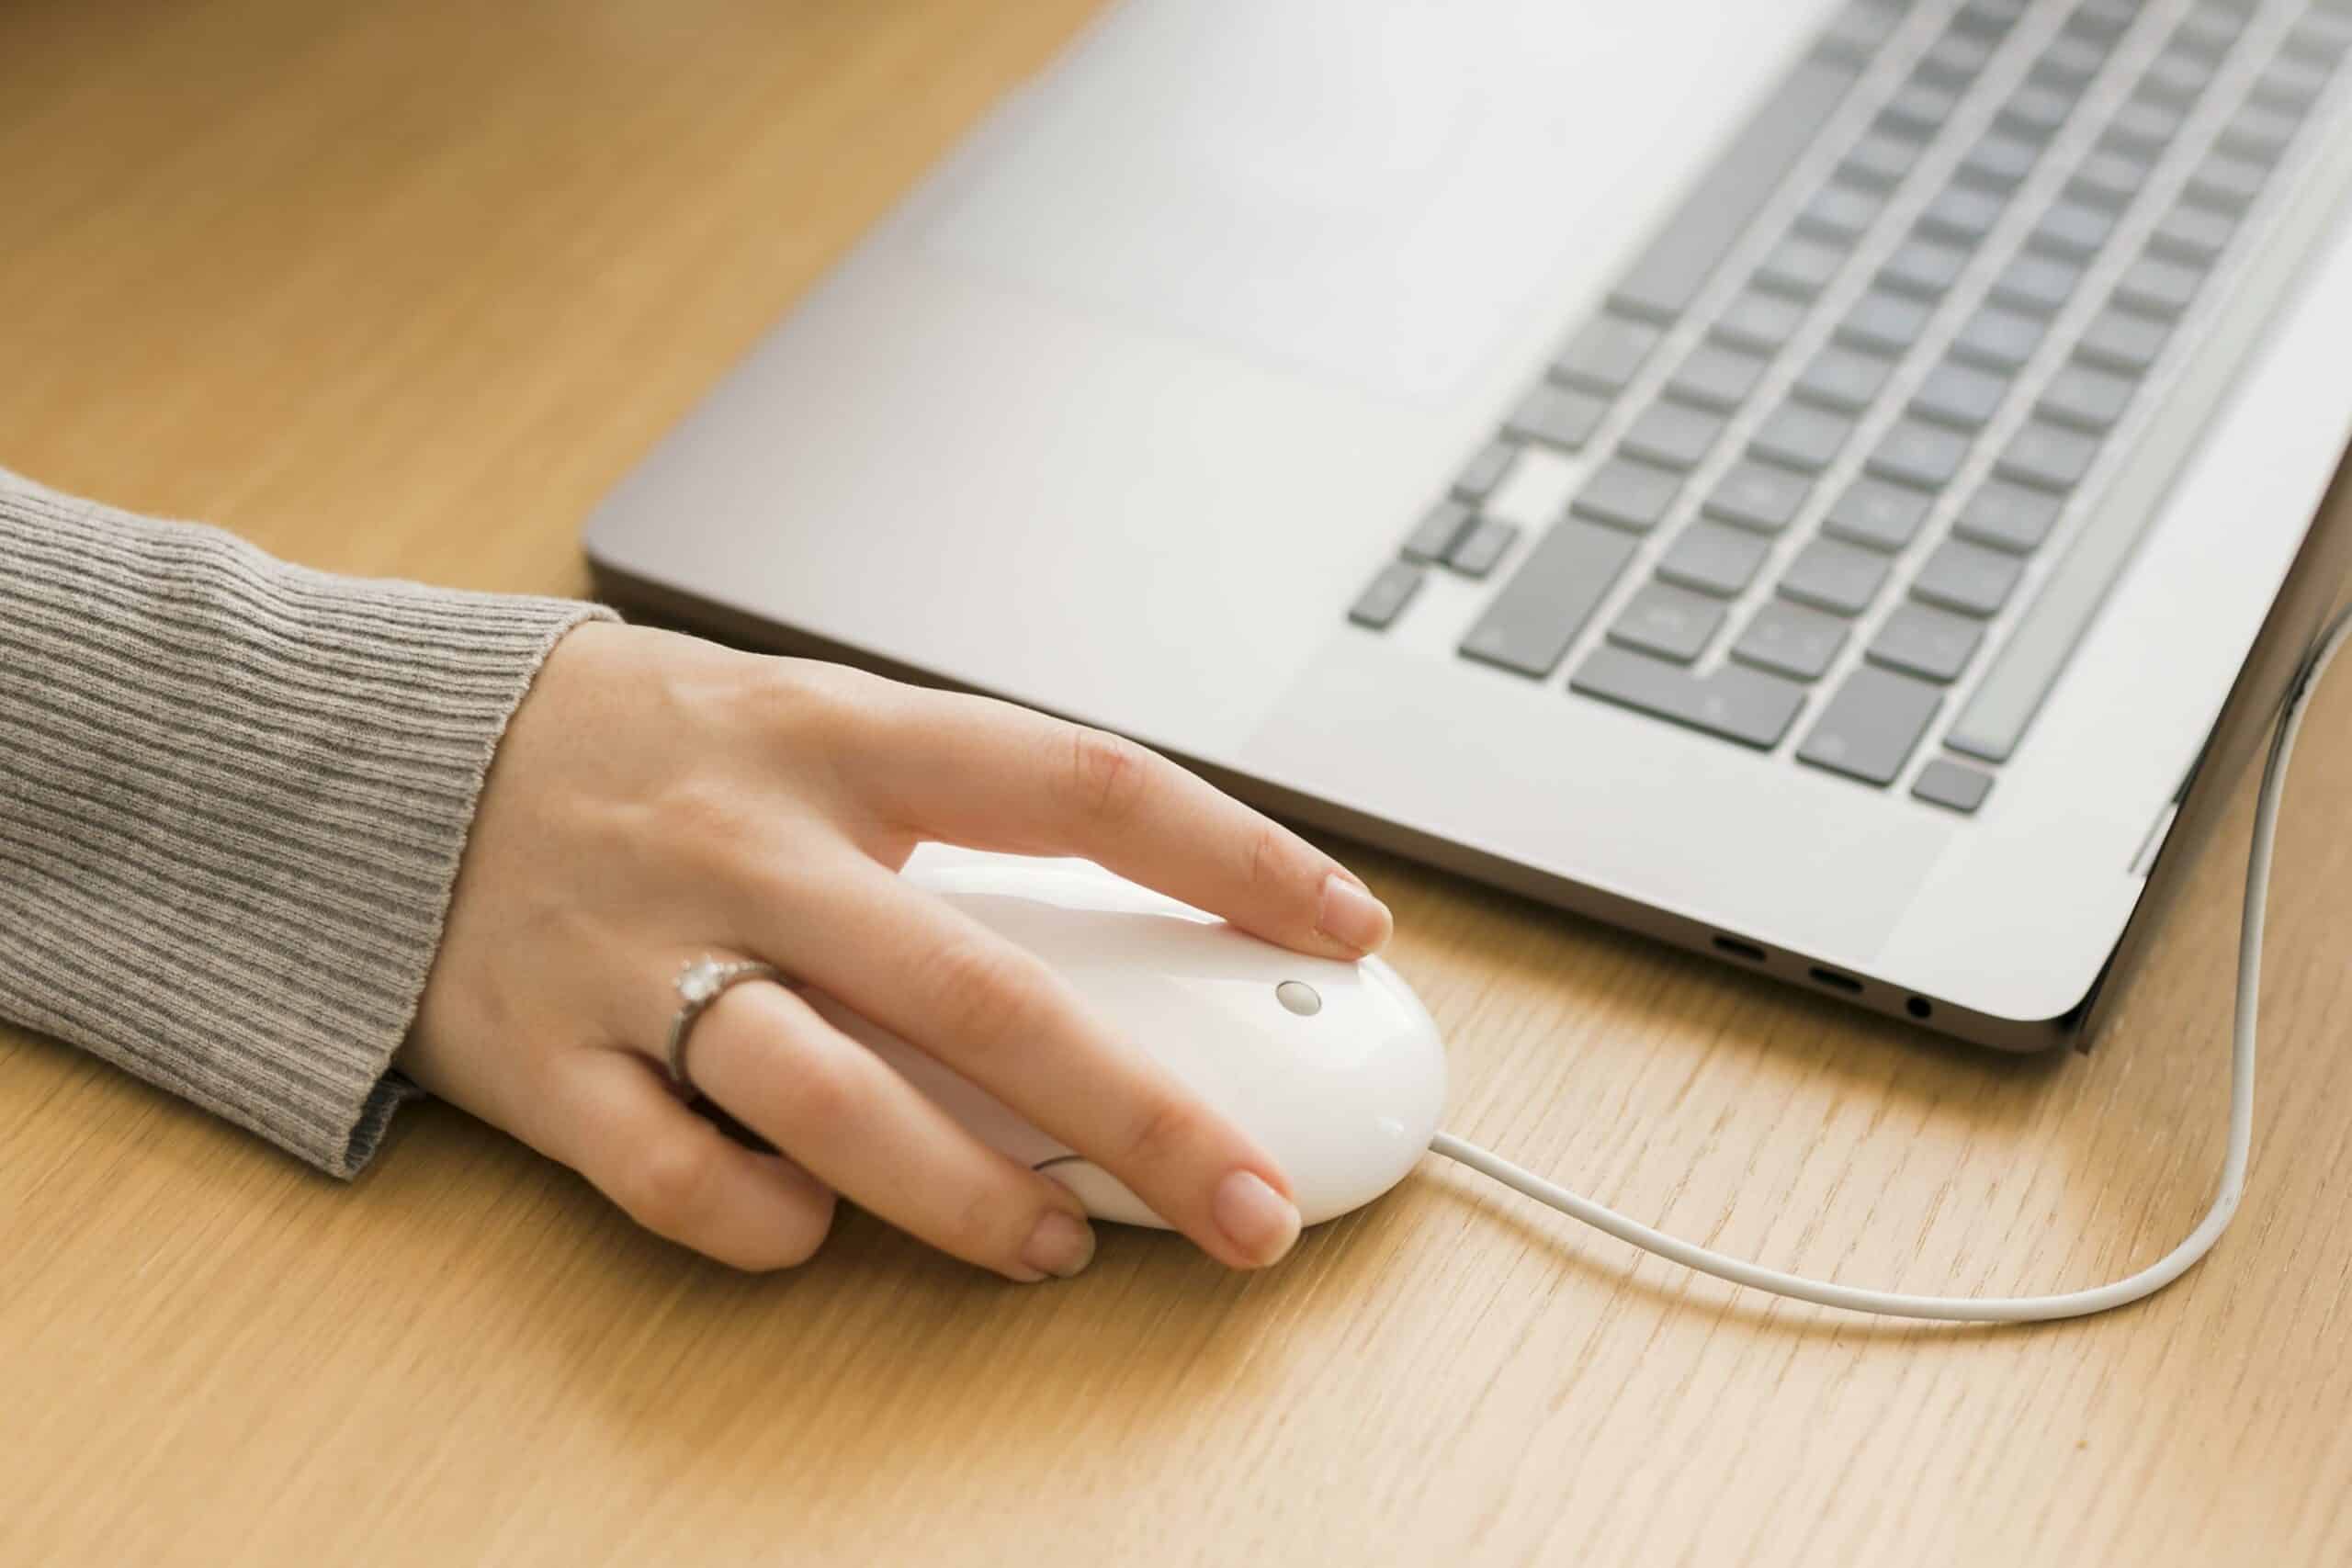 close up woman laptop using mouse